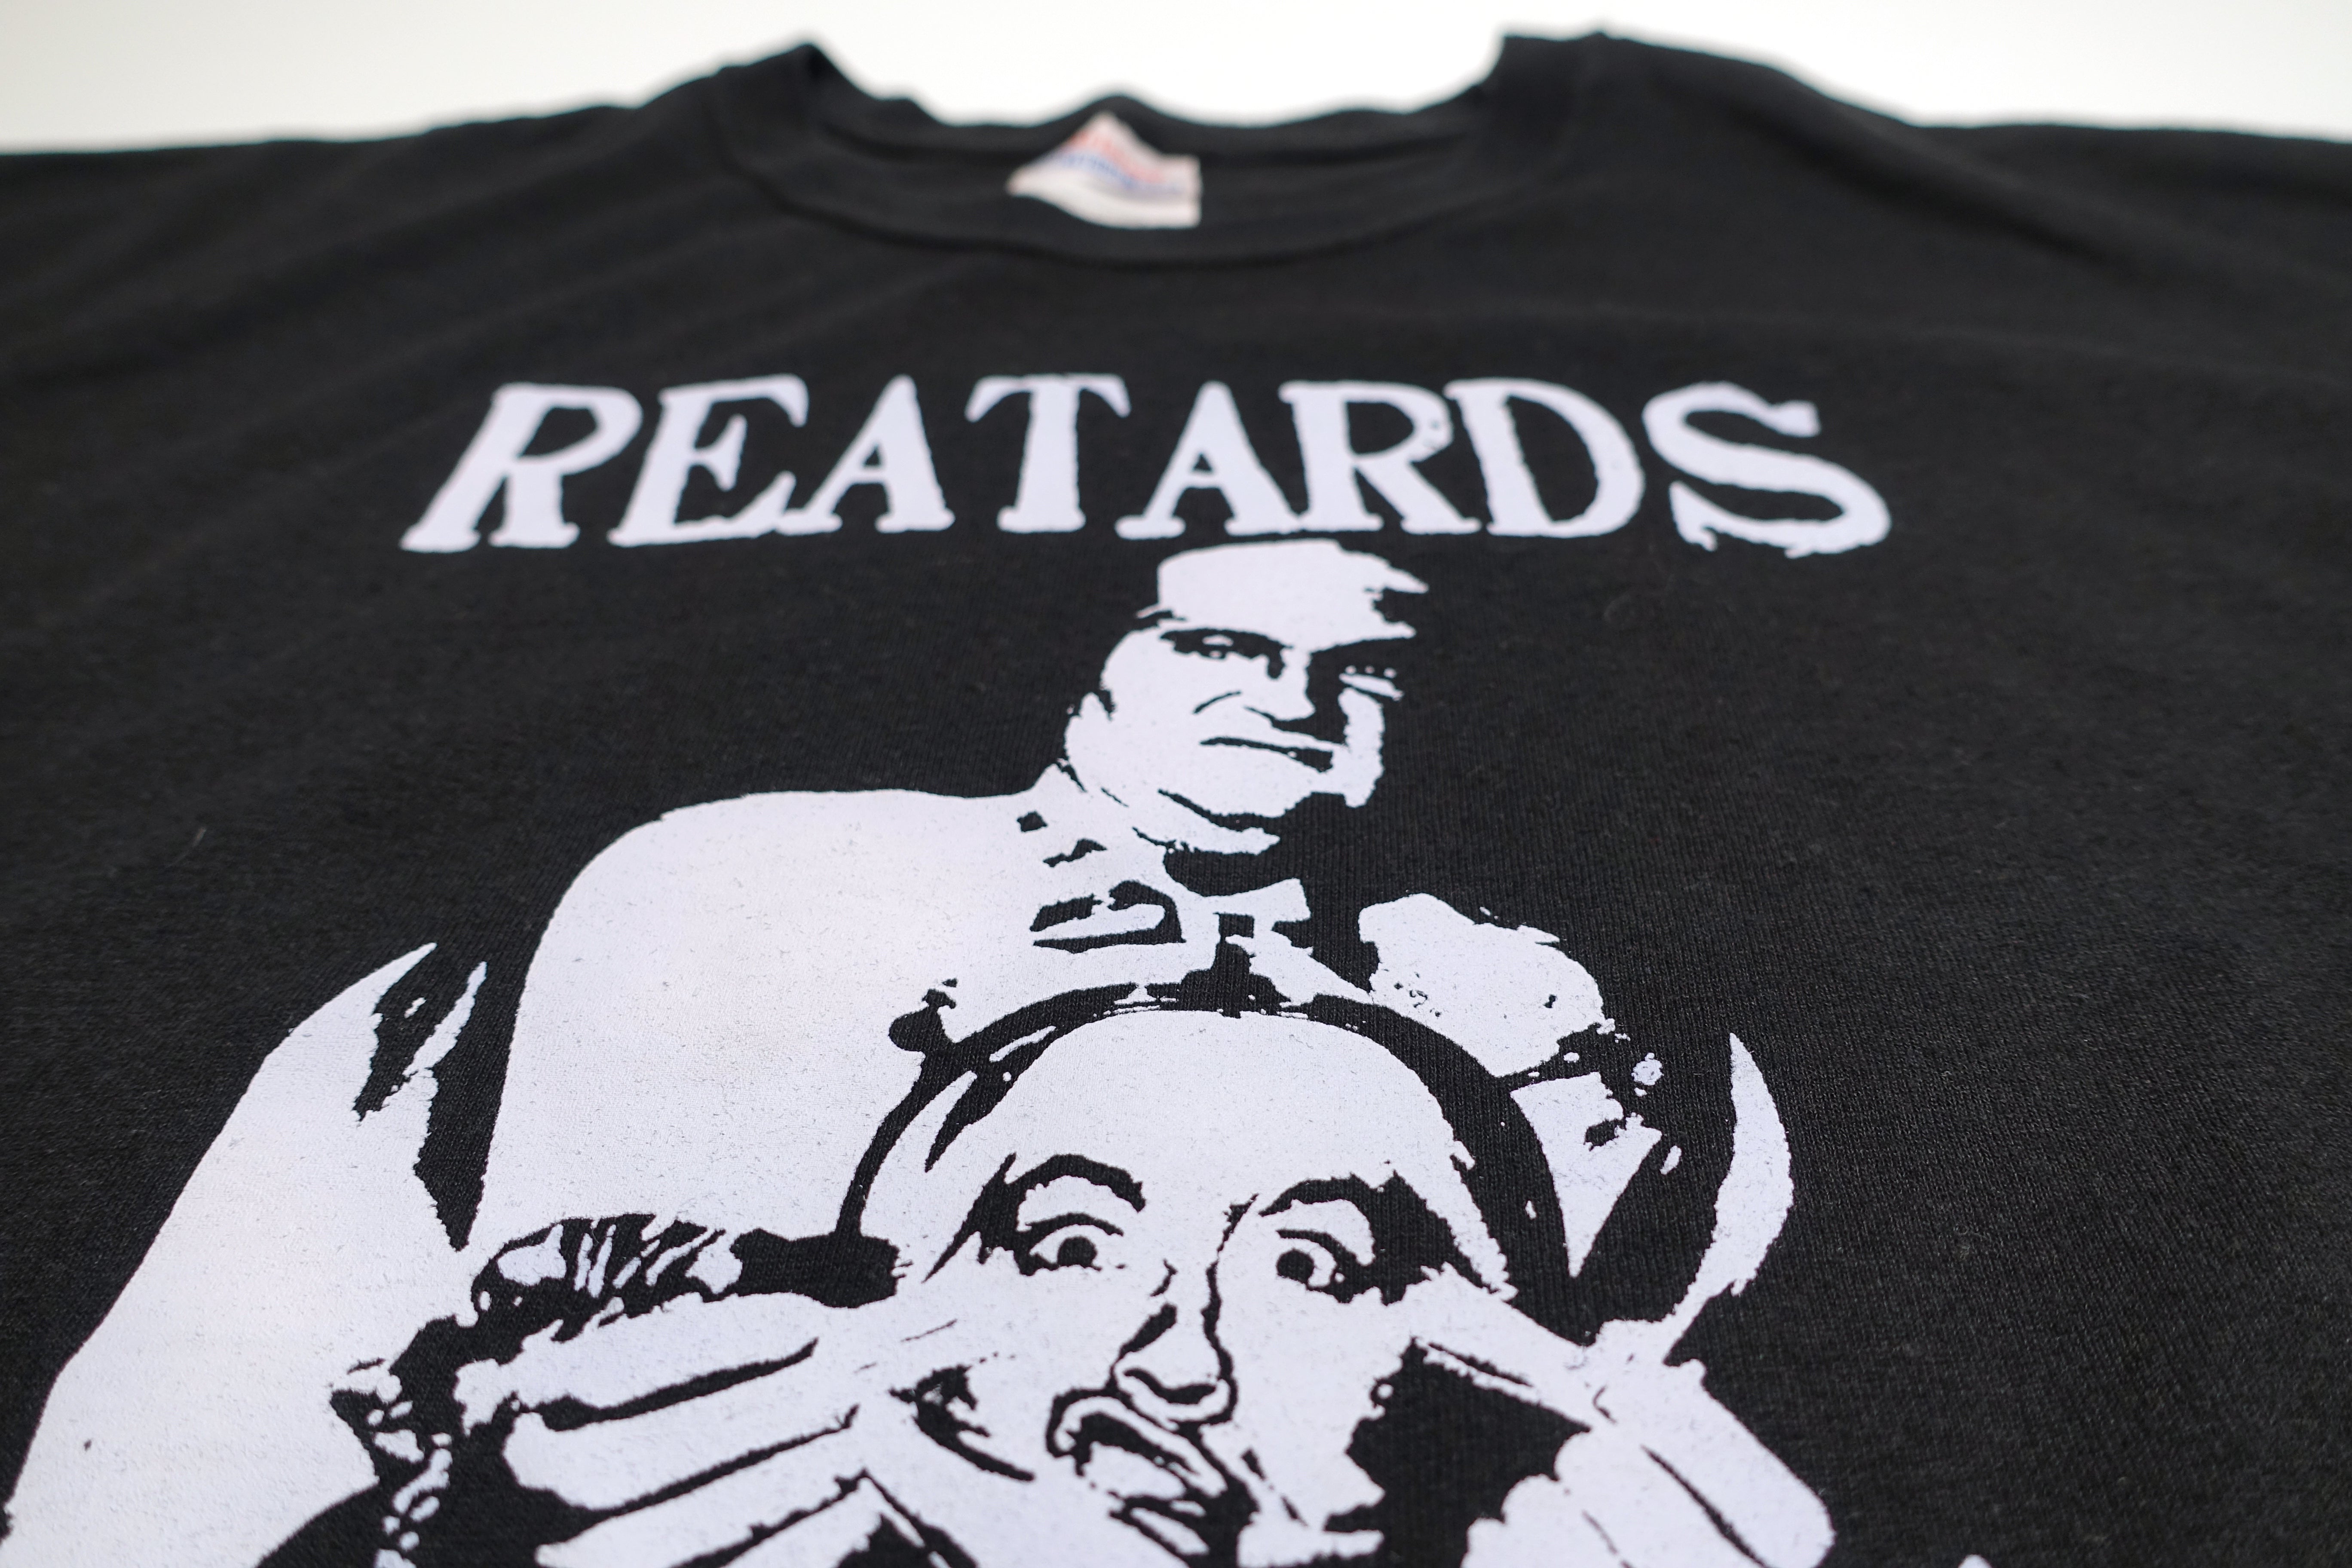 the Reatards - Plastic Surgery 2005 Tour Shirt Size Large